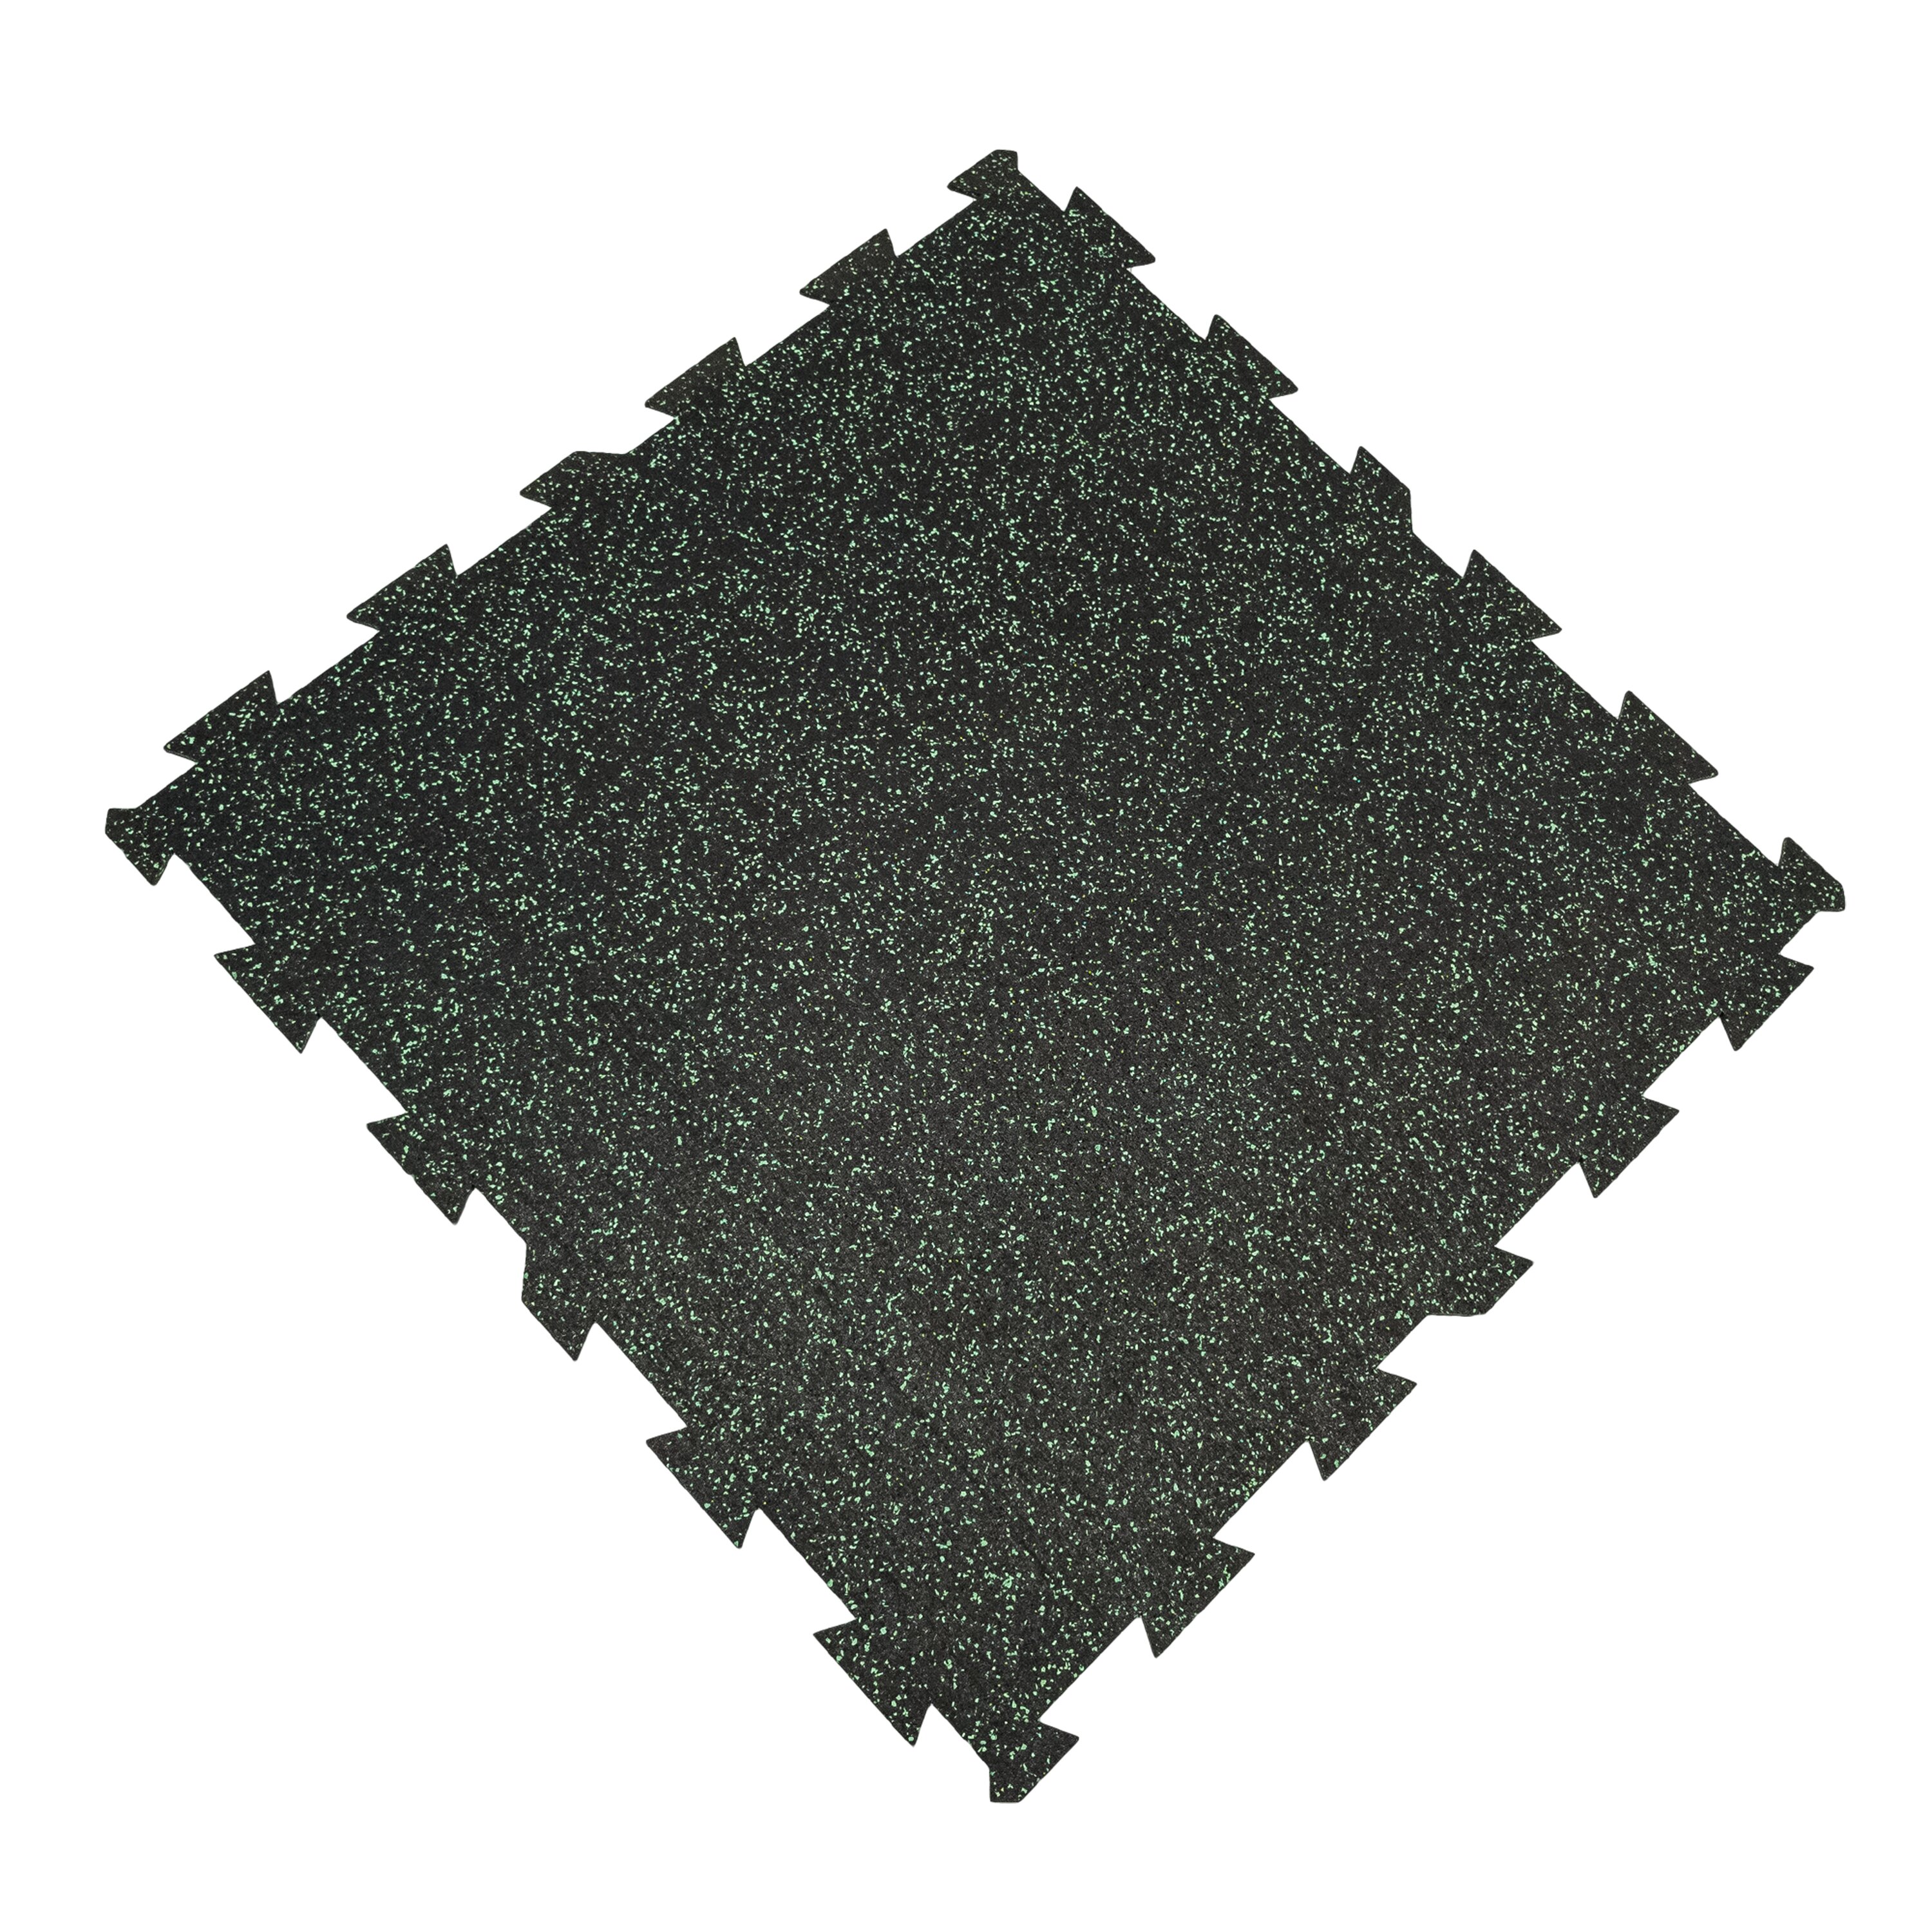 Černo-zelená gumová modulová puzzle dlažba (střed) FLOMA FitFlo SF1050 - délka 100 cm, šířka 100 cm, výška 1,6 cm